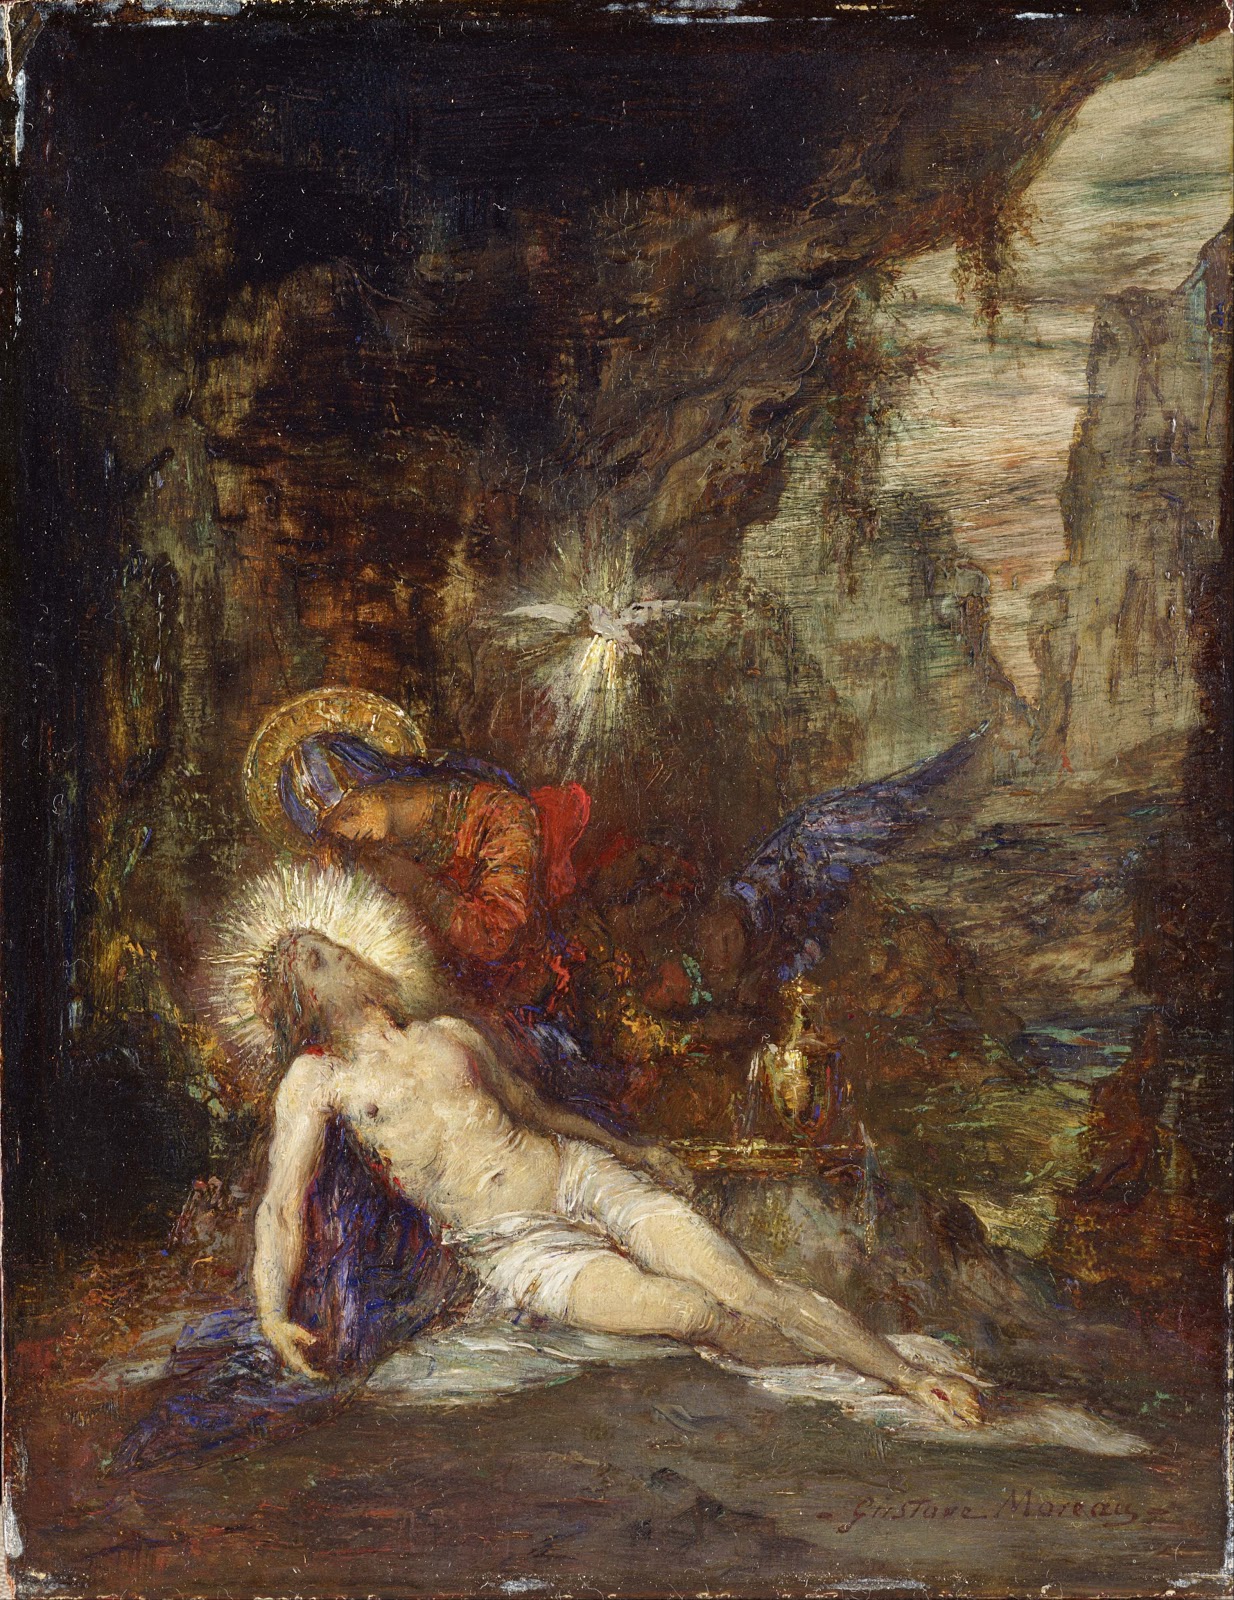 Gustave+Moreau-1826-1898 (115).jpg